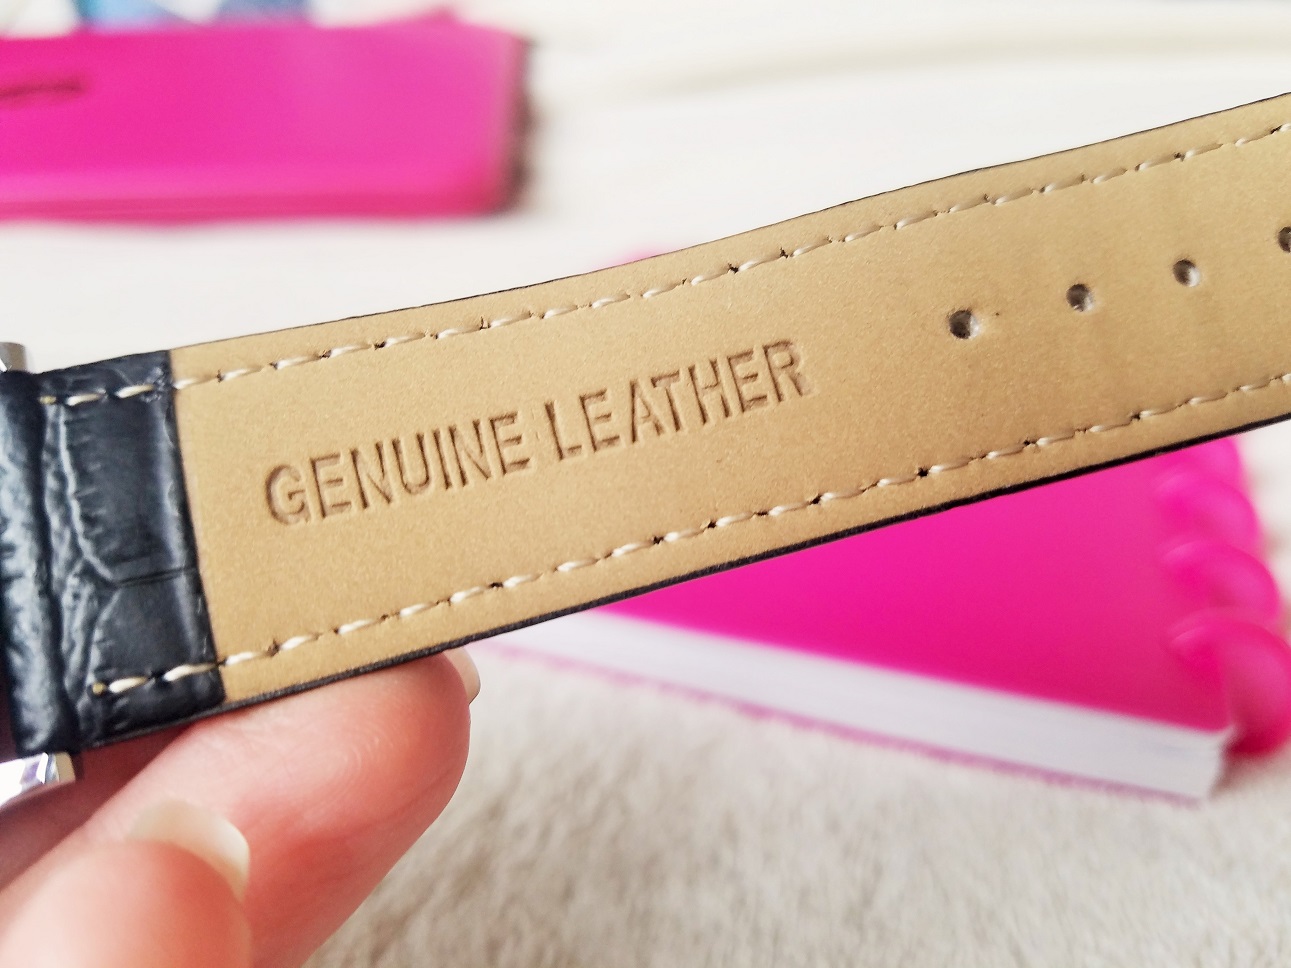 Novanu London Watch - Genuine leather watch strap